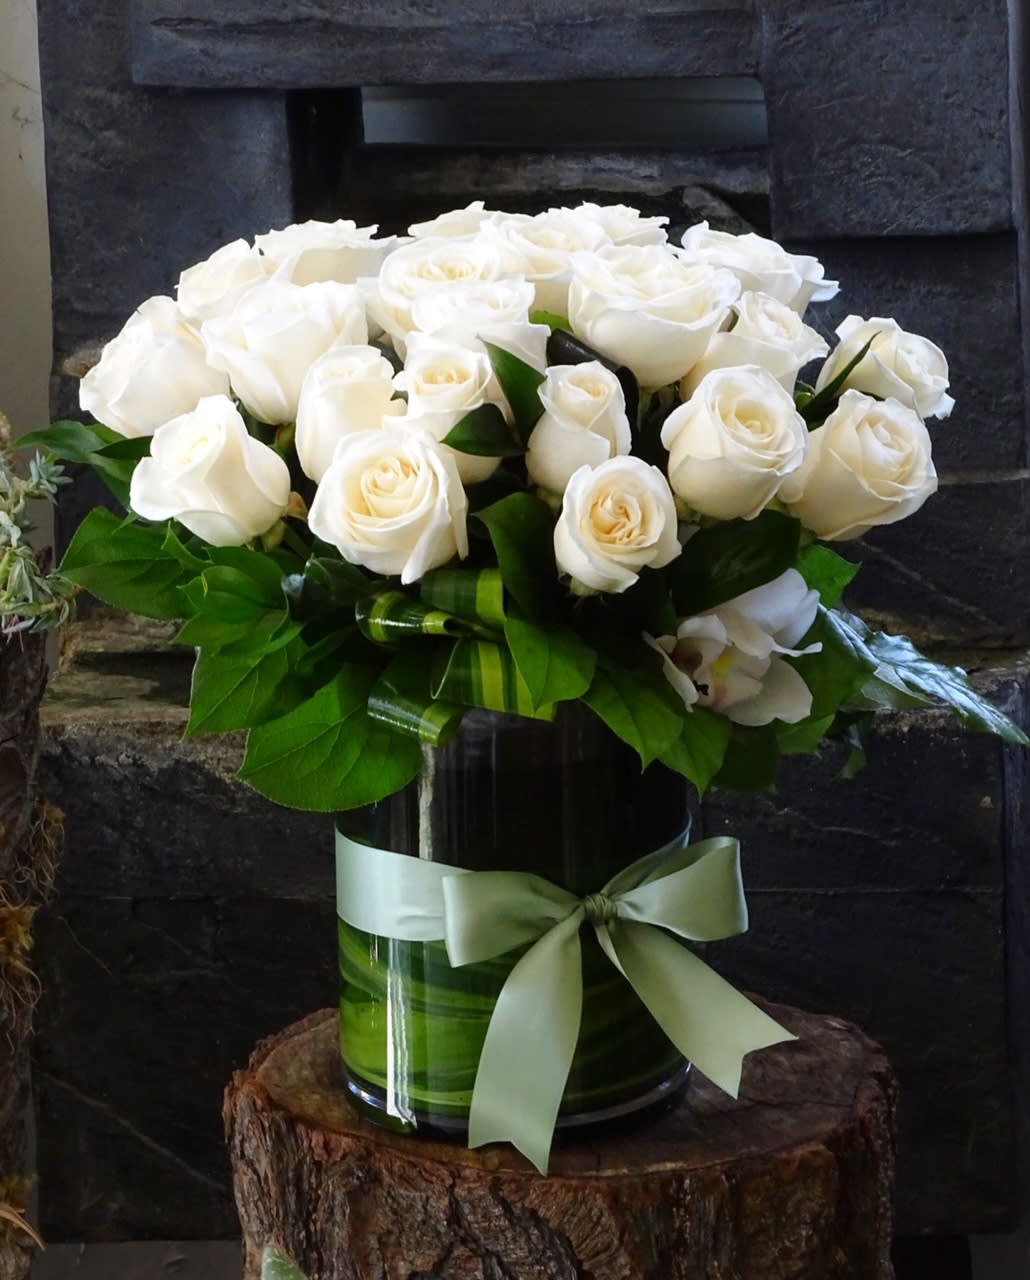 Pure White - Two dozen premium white Roses, Cymbidium Orchid, in glass vase.